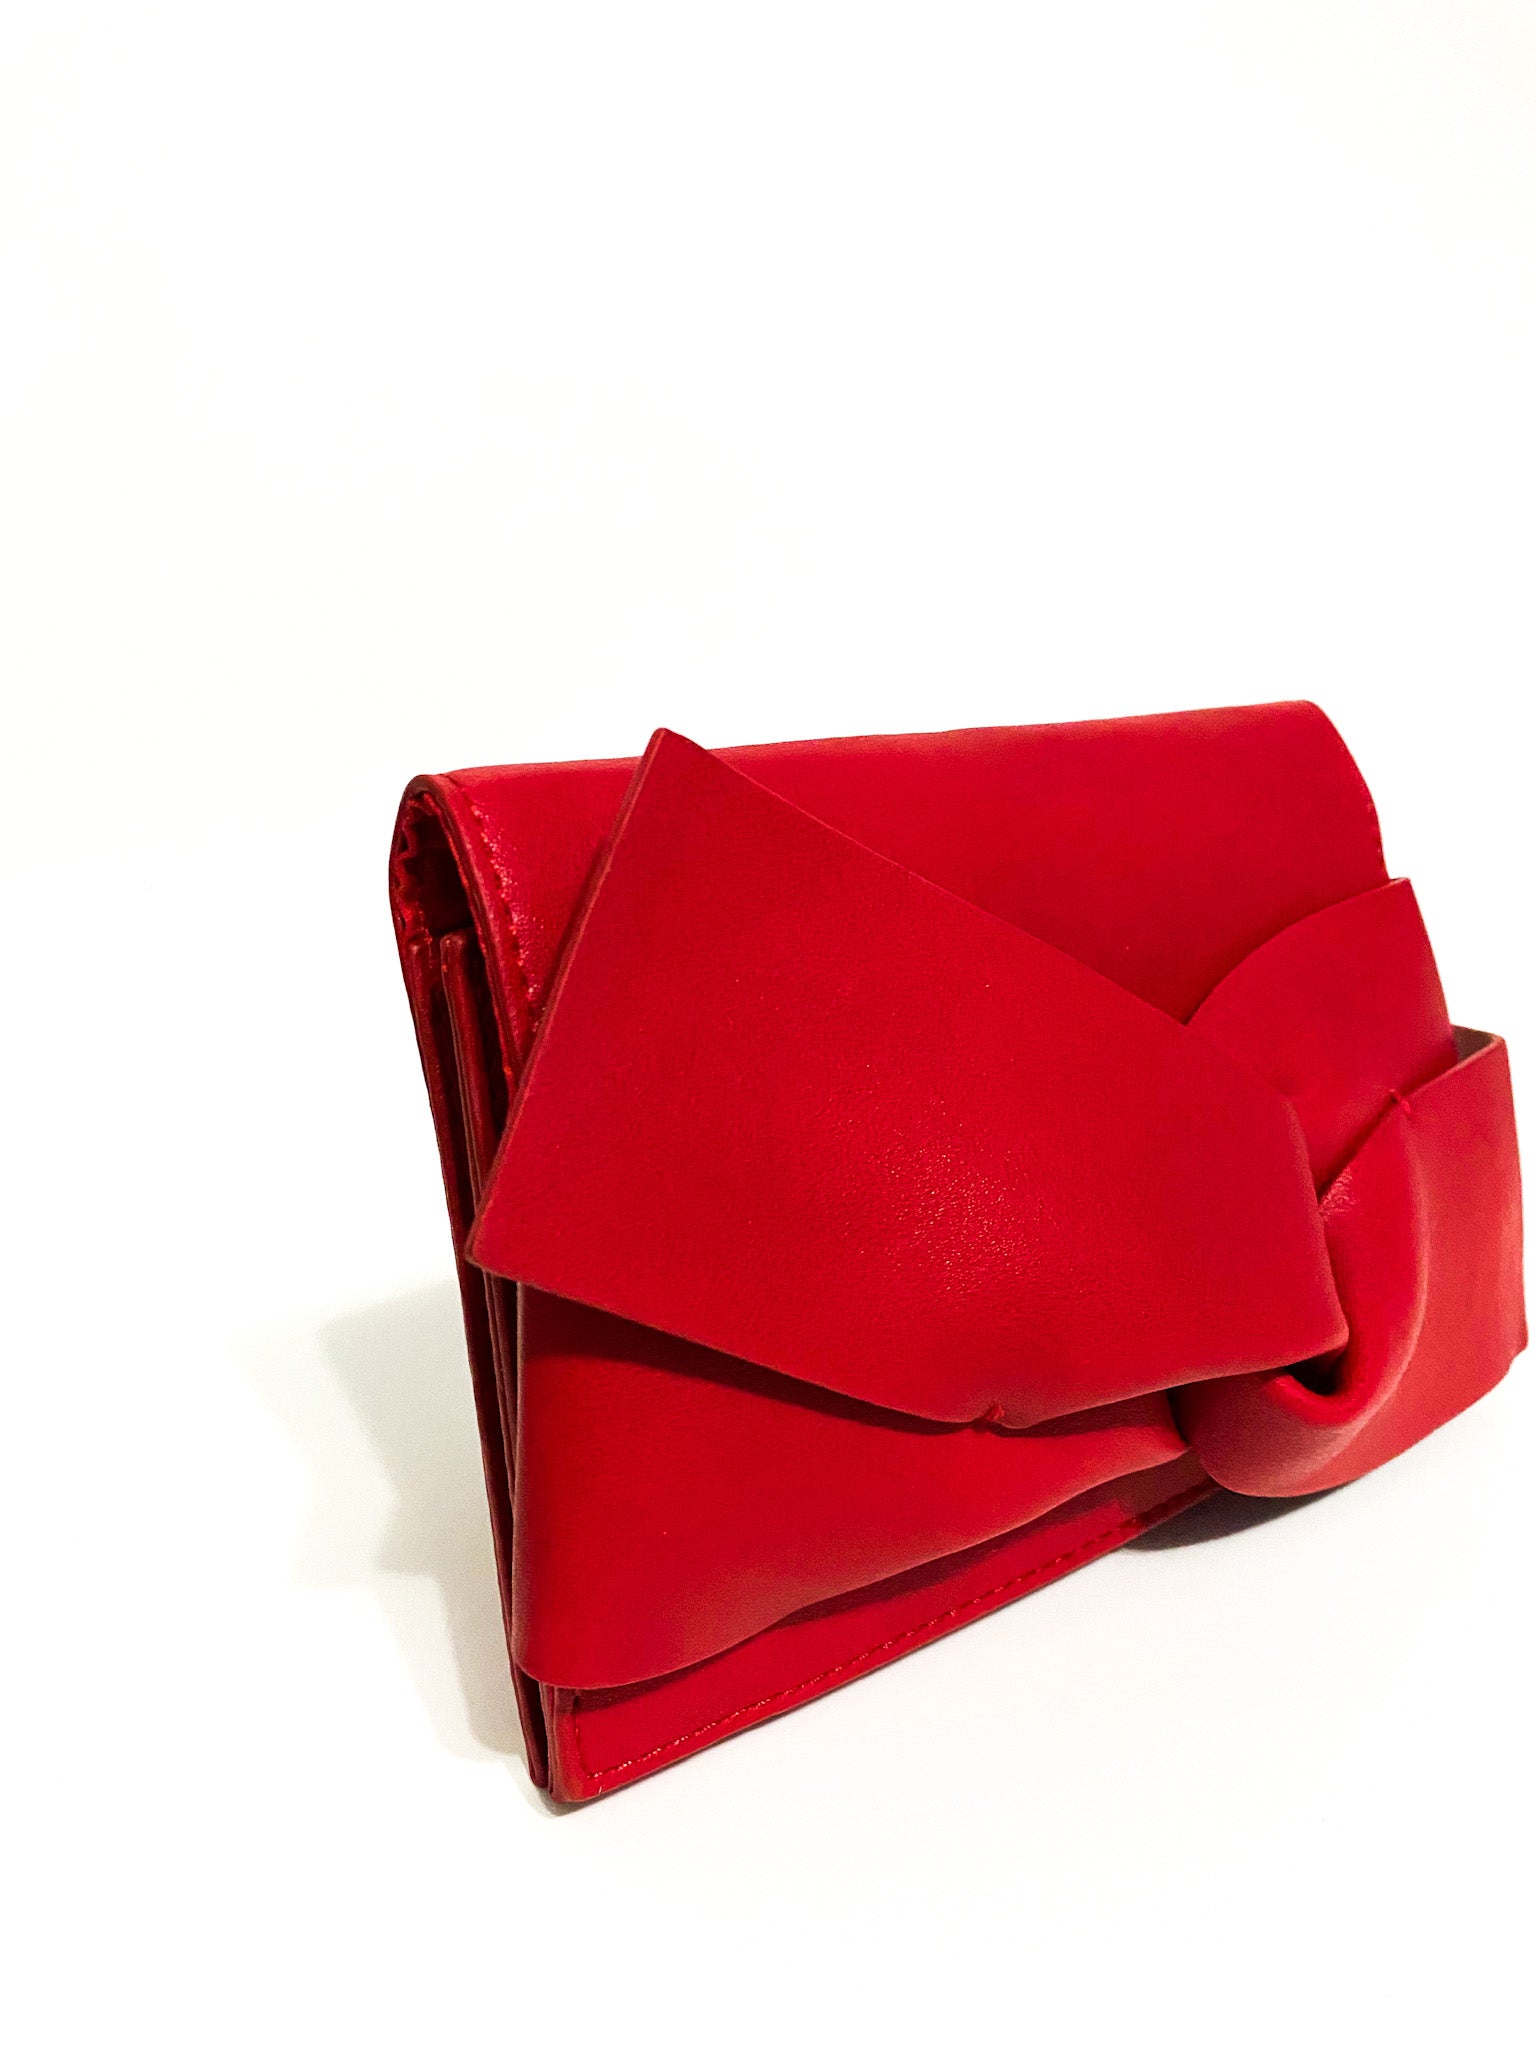 Victoria's Secret Gold Bow Clutch Purse Handbag | eBay